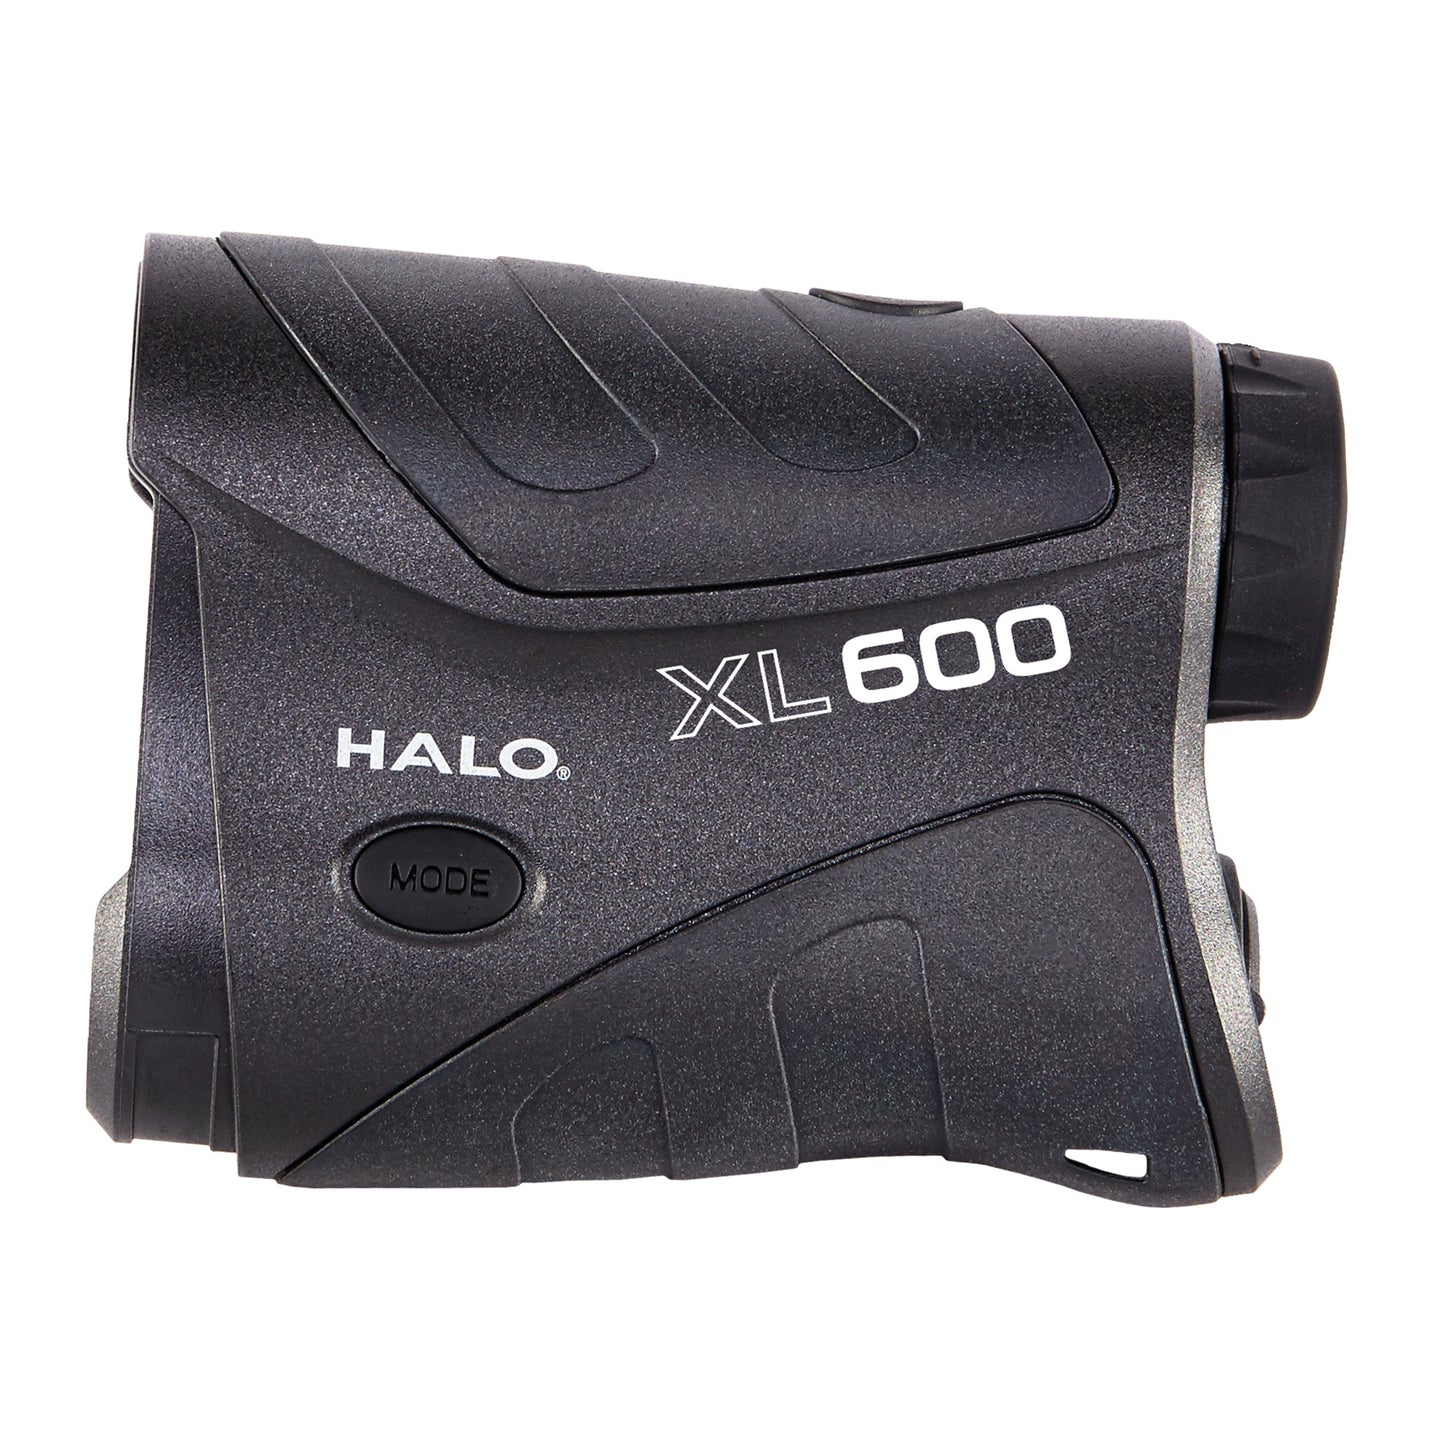 HALO, XL600, Rangefinder, 6X Magnification, 22mm Objective, Matte Finish, Black